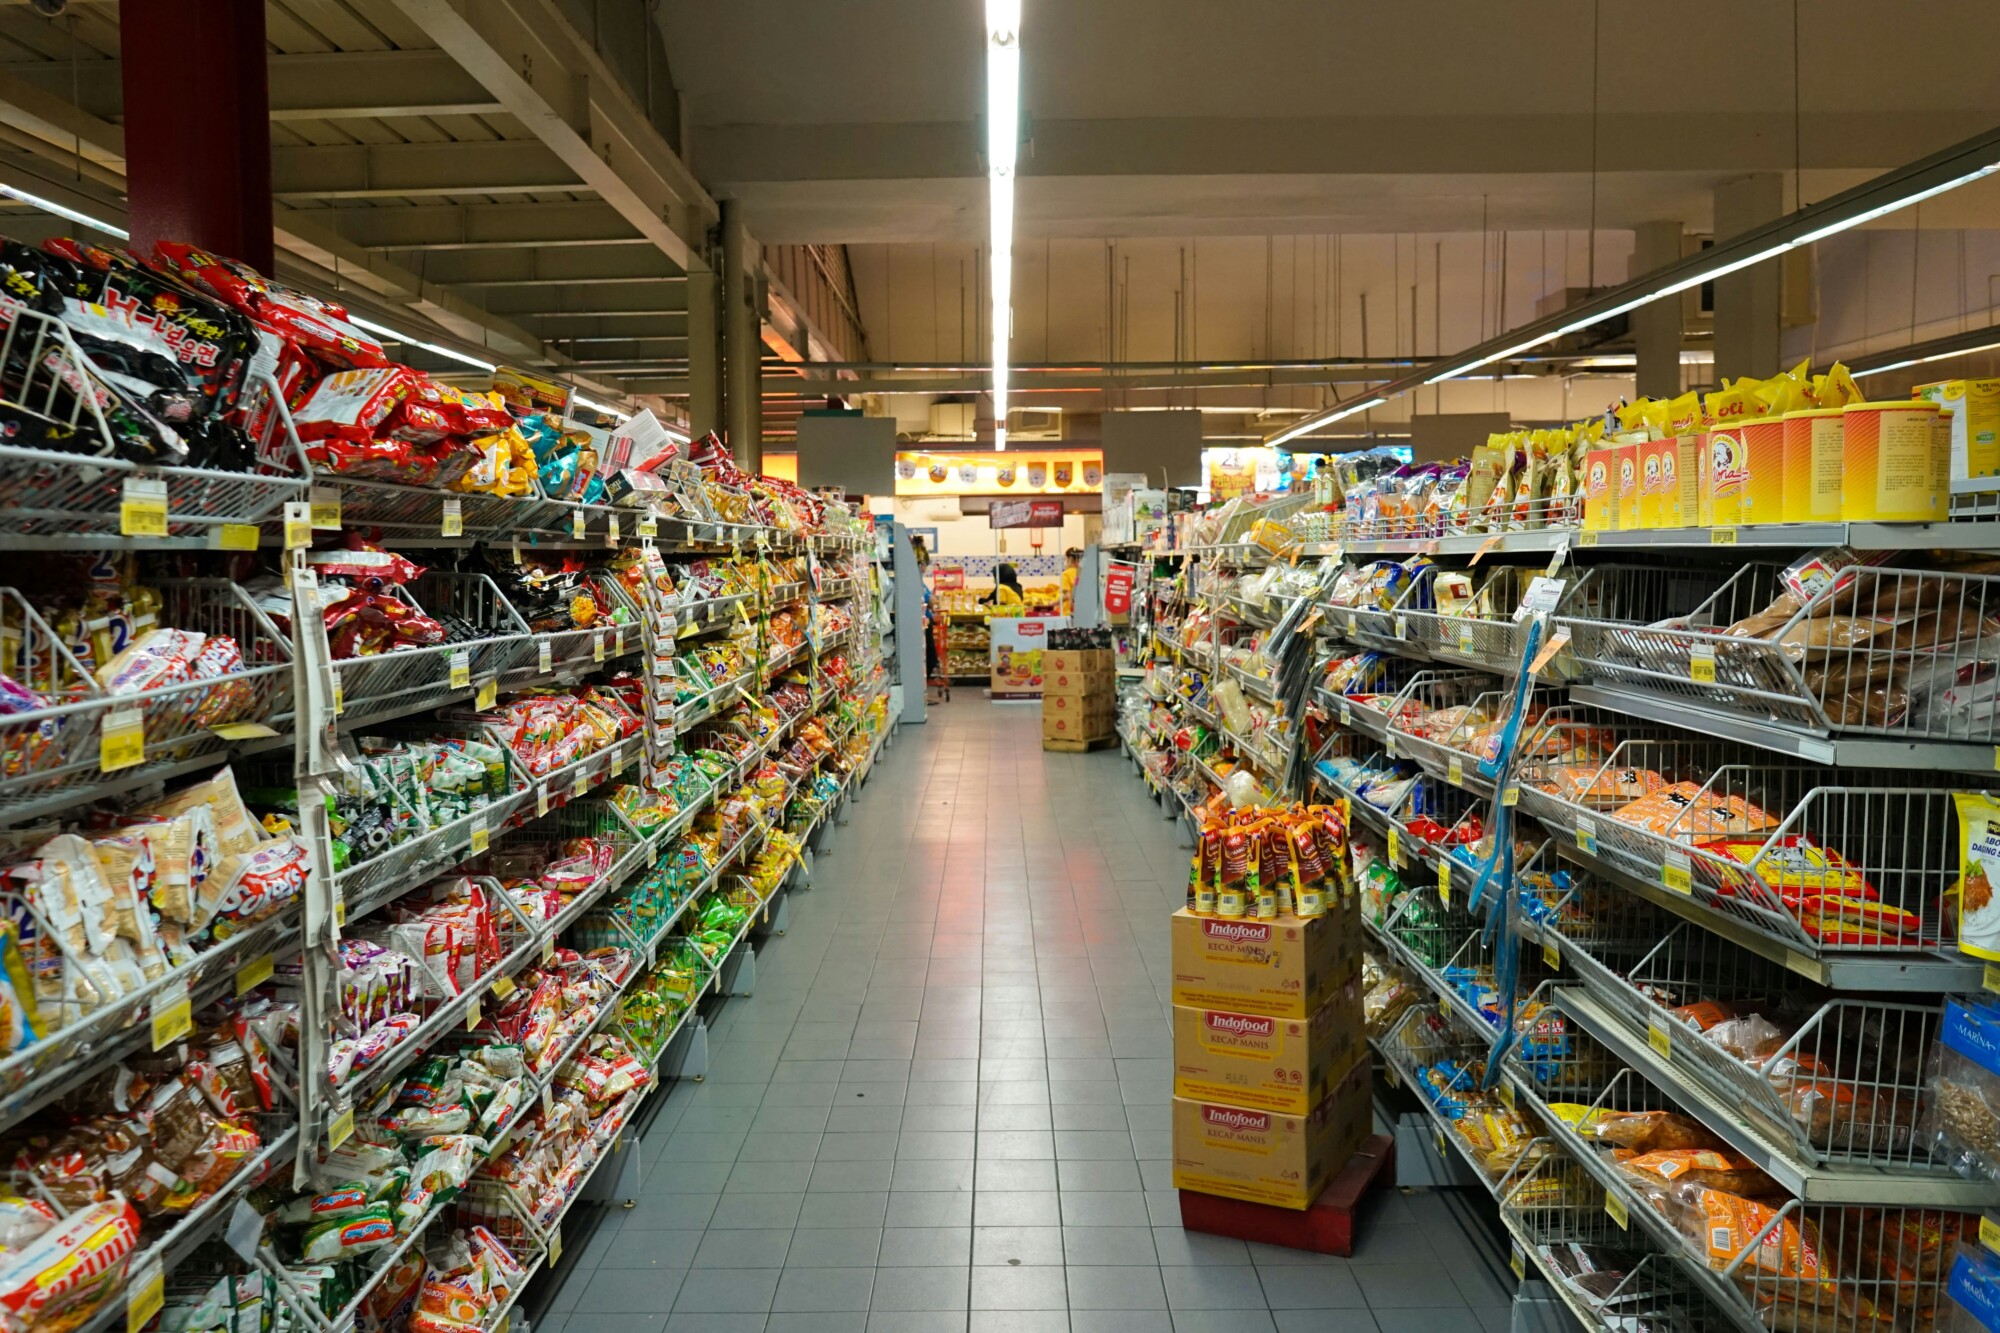 Photograph of a supermarket aisle